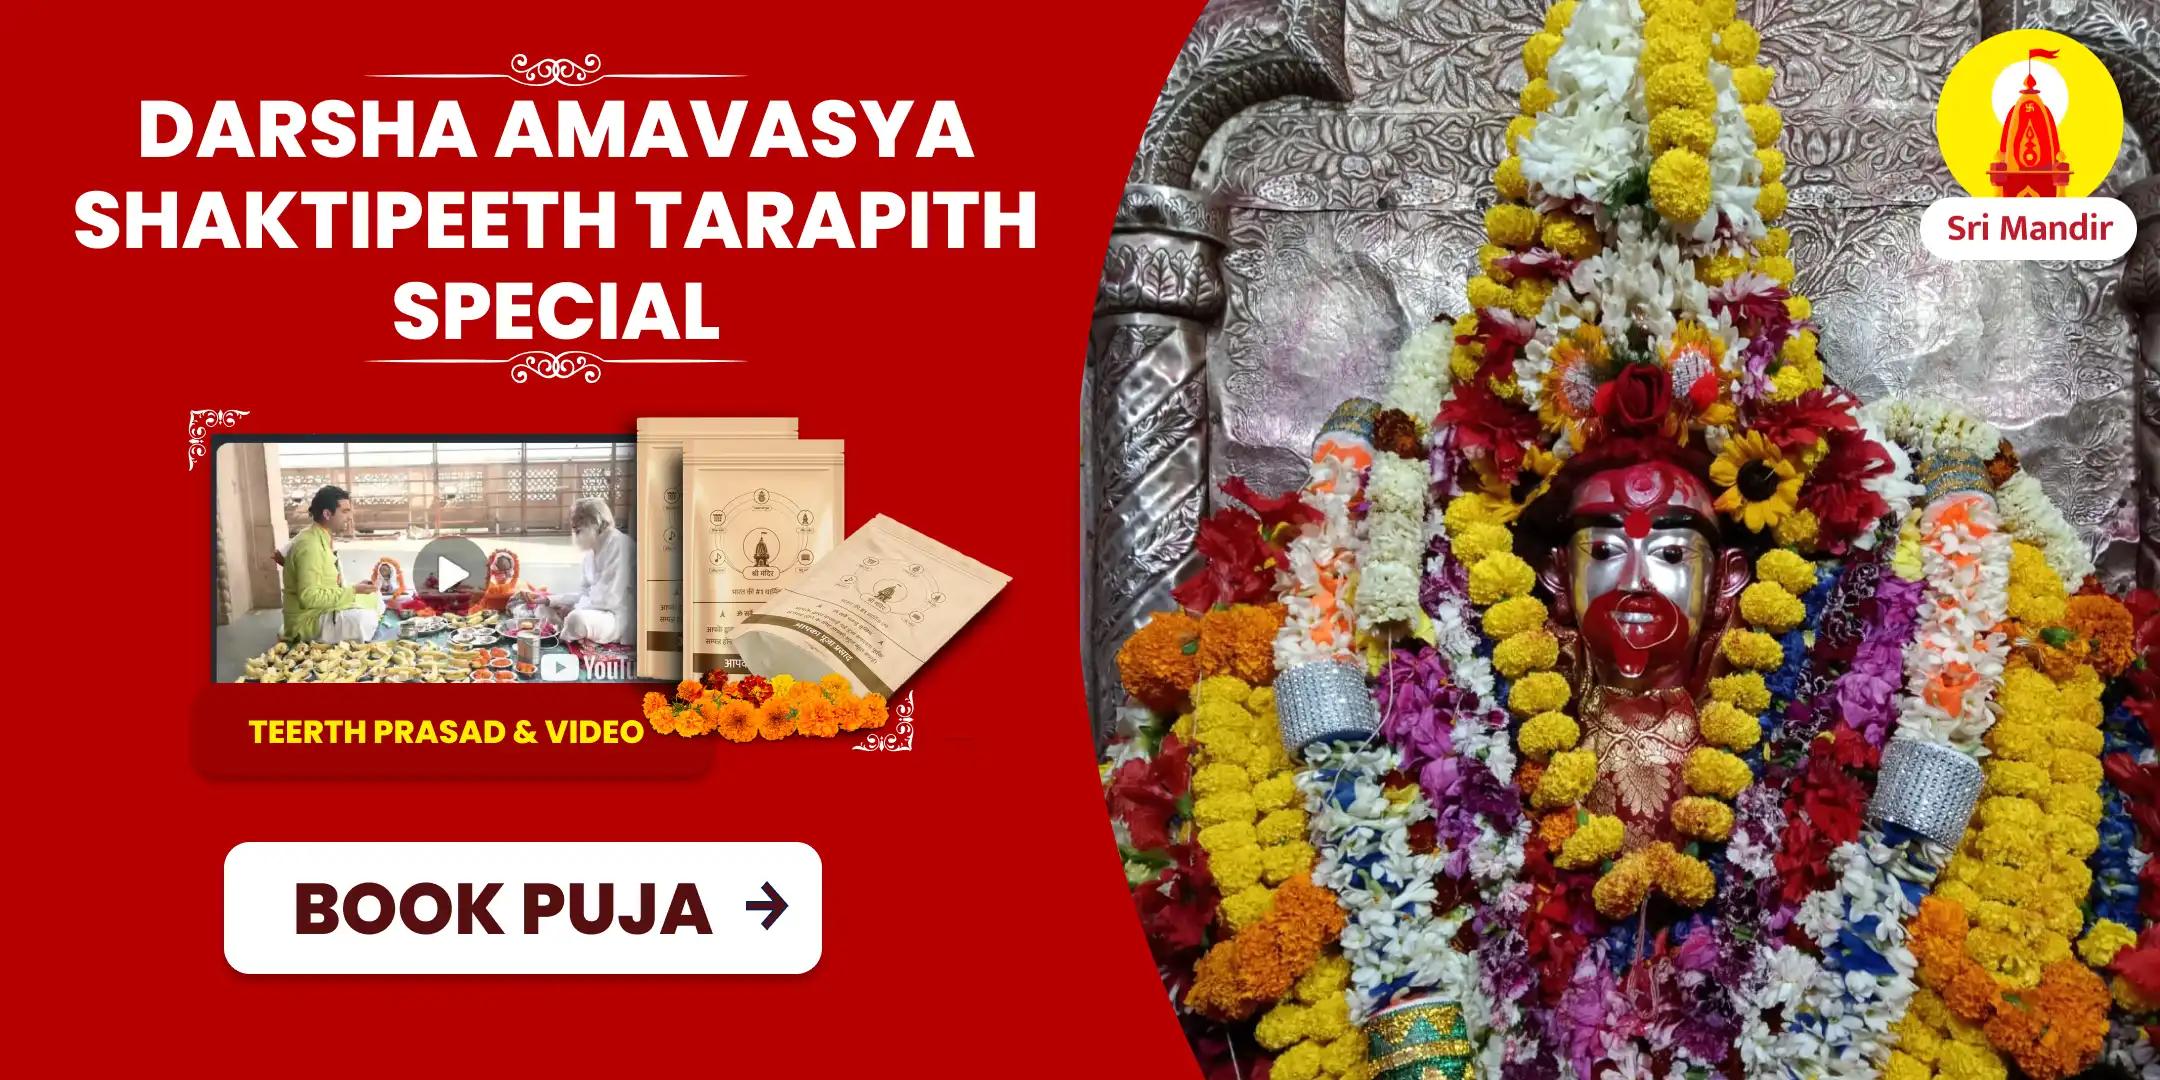 Darsha Amavasya Shaktipeeth Special Shri Maa Tara Tantrokta Mahapuja for Freedom From Fear and Destruction of Malevolent Influences